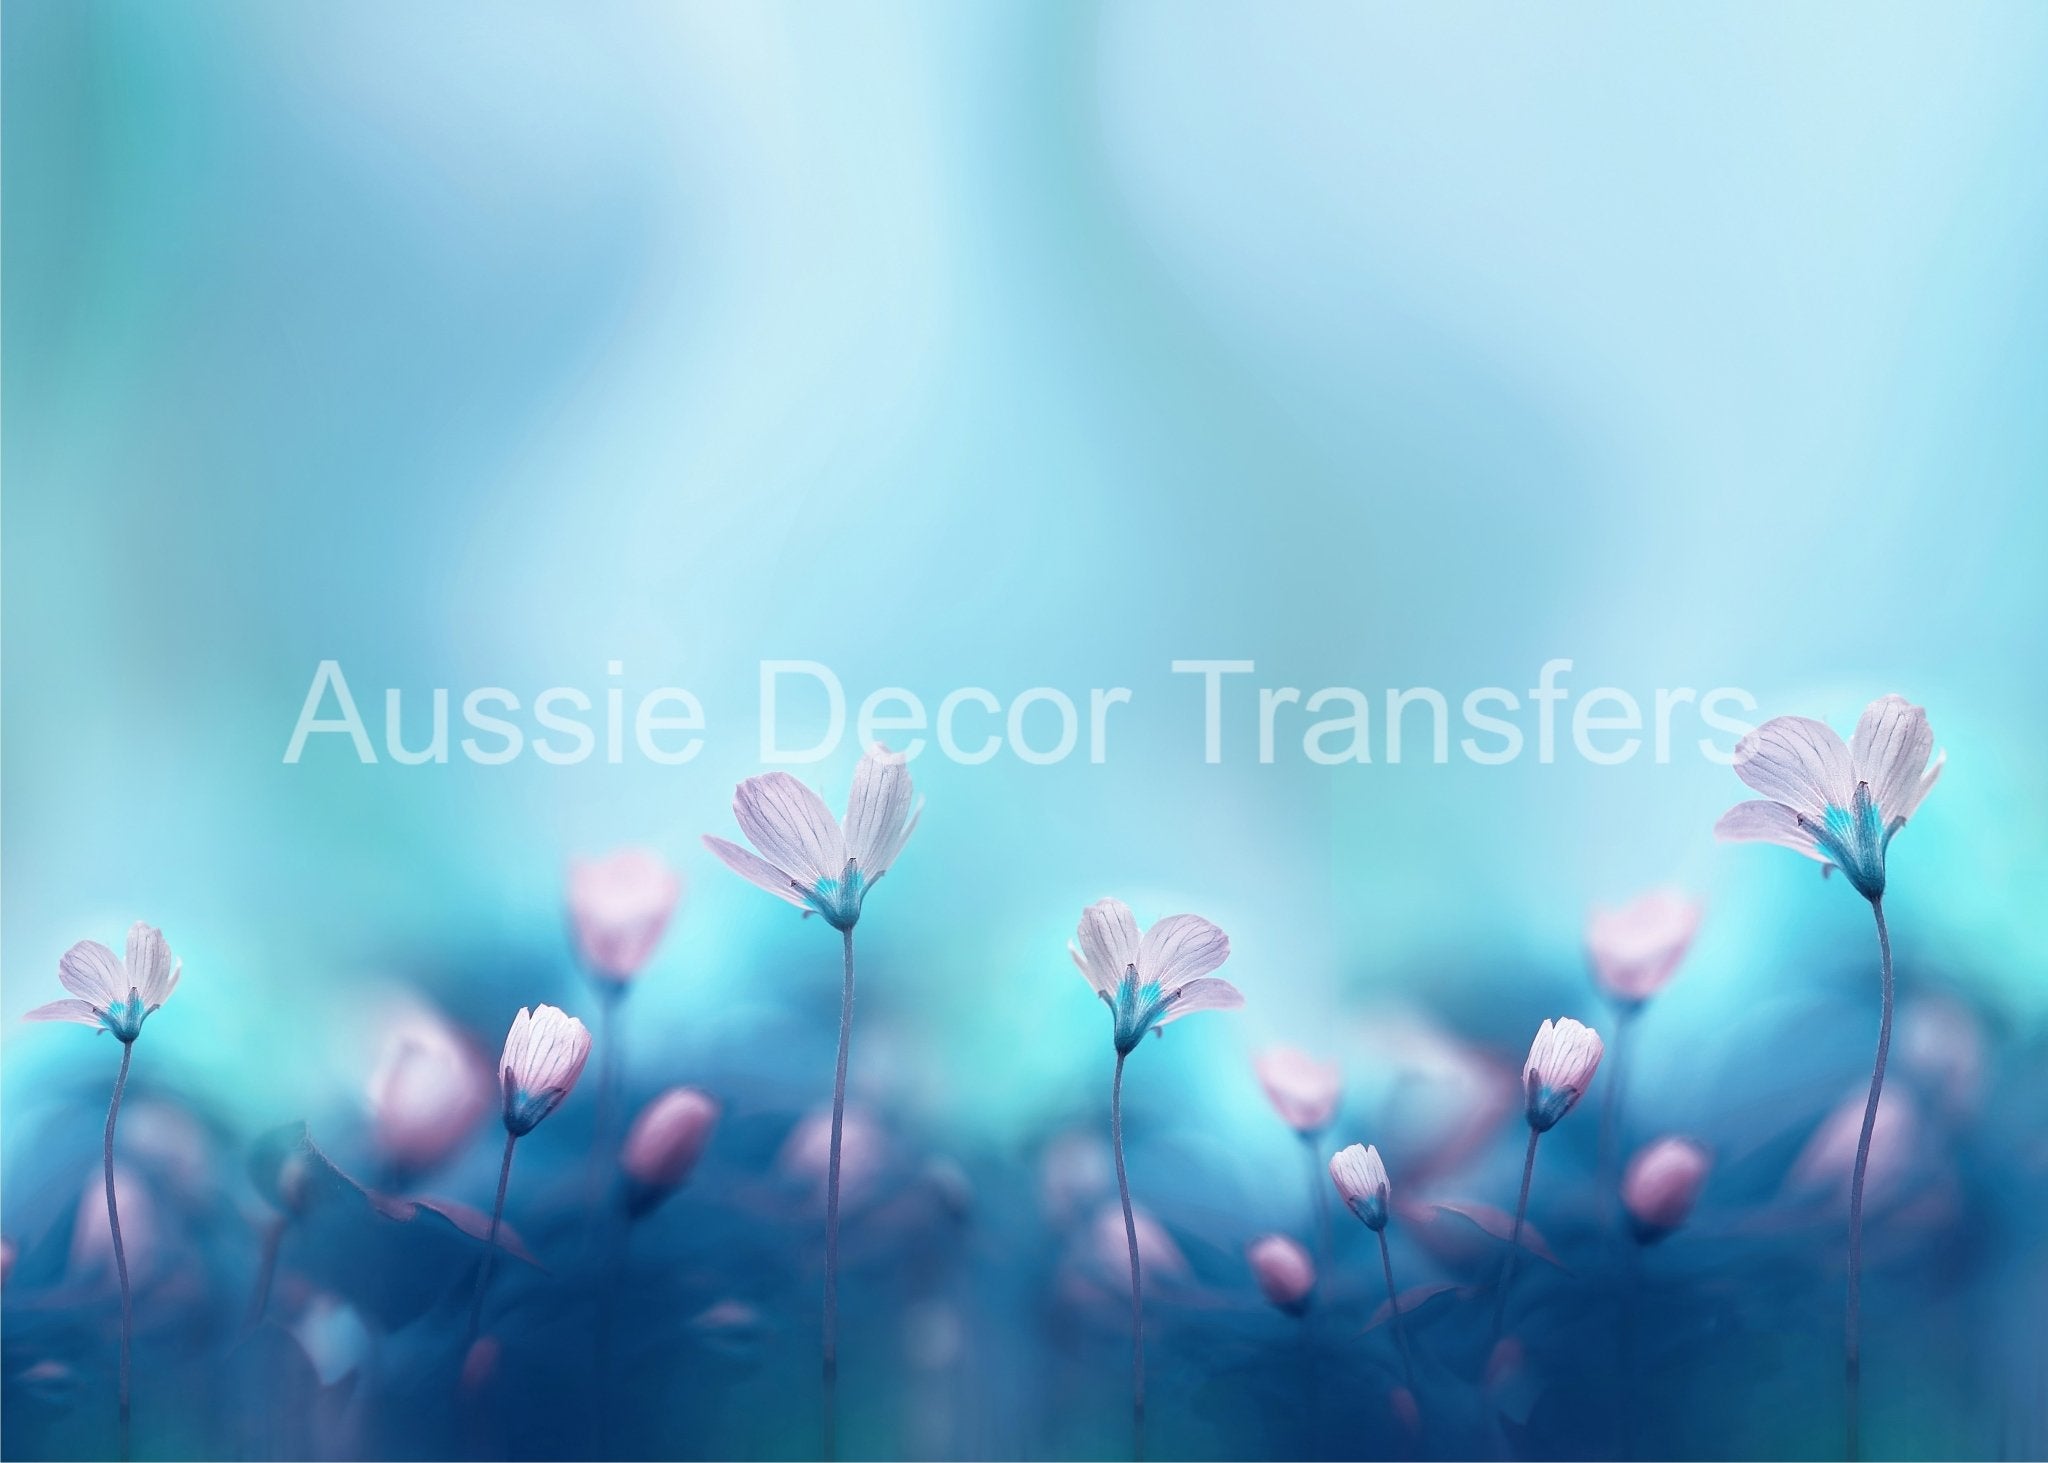 Aussie Decor Transfers Poster Print White Primrose - Not Your Average Poster Print! - AUS Only